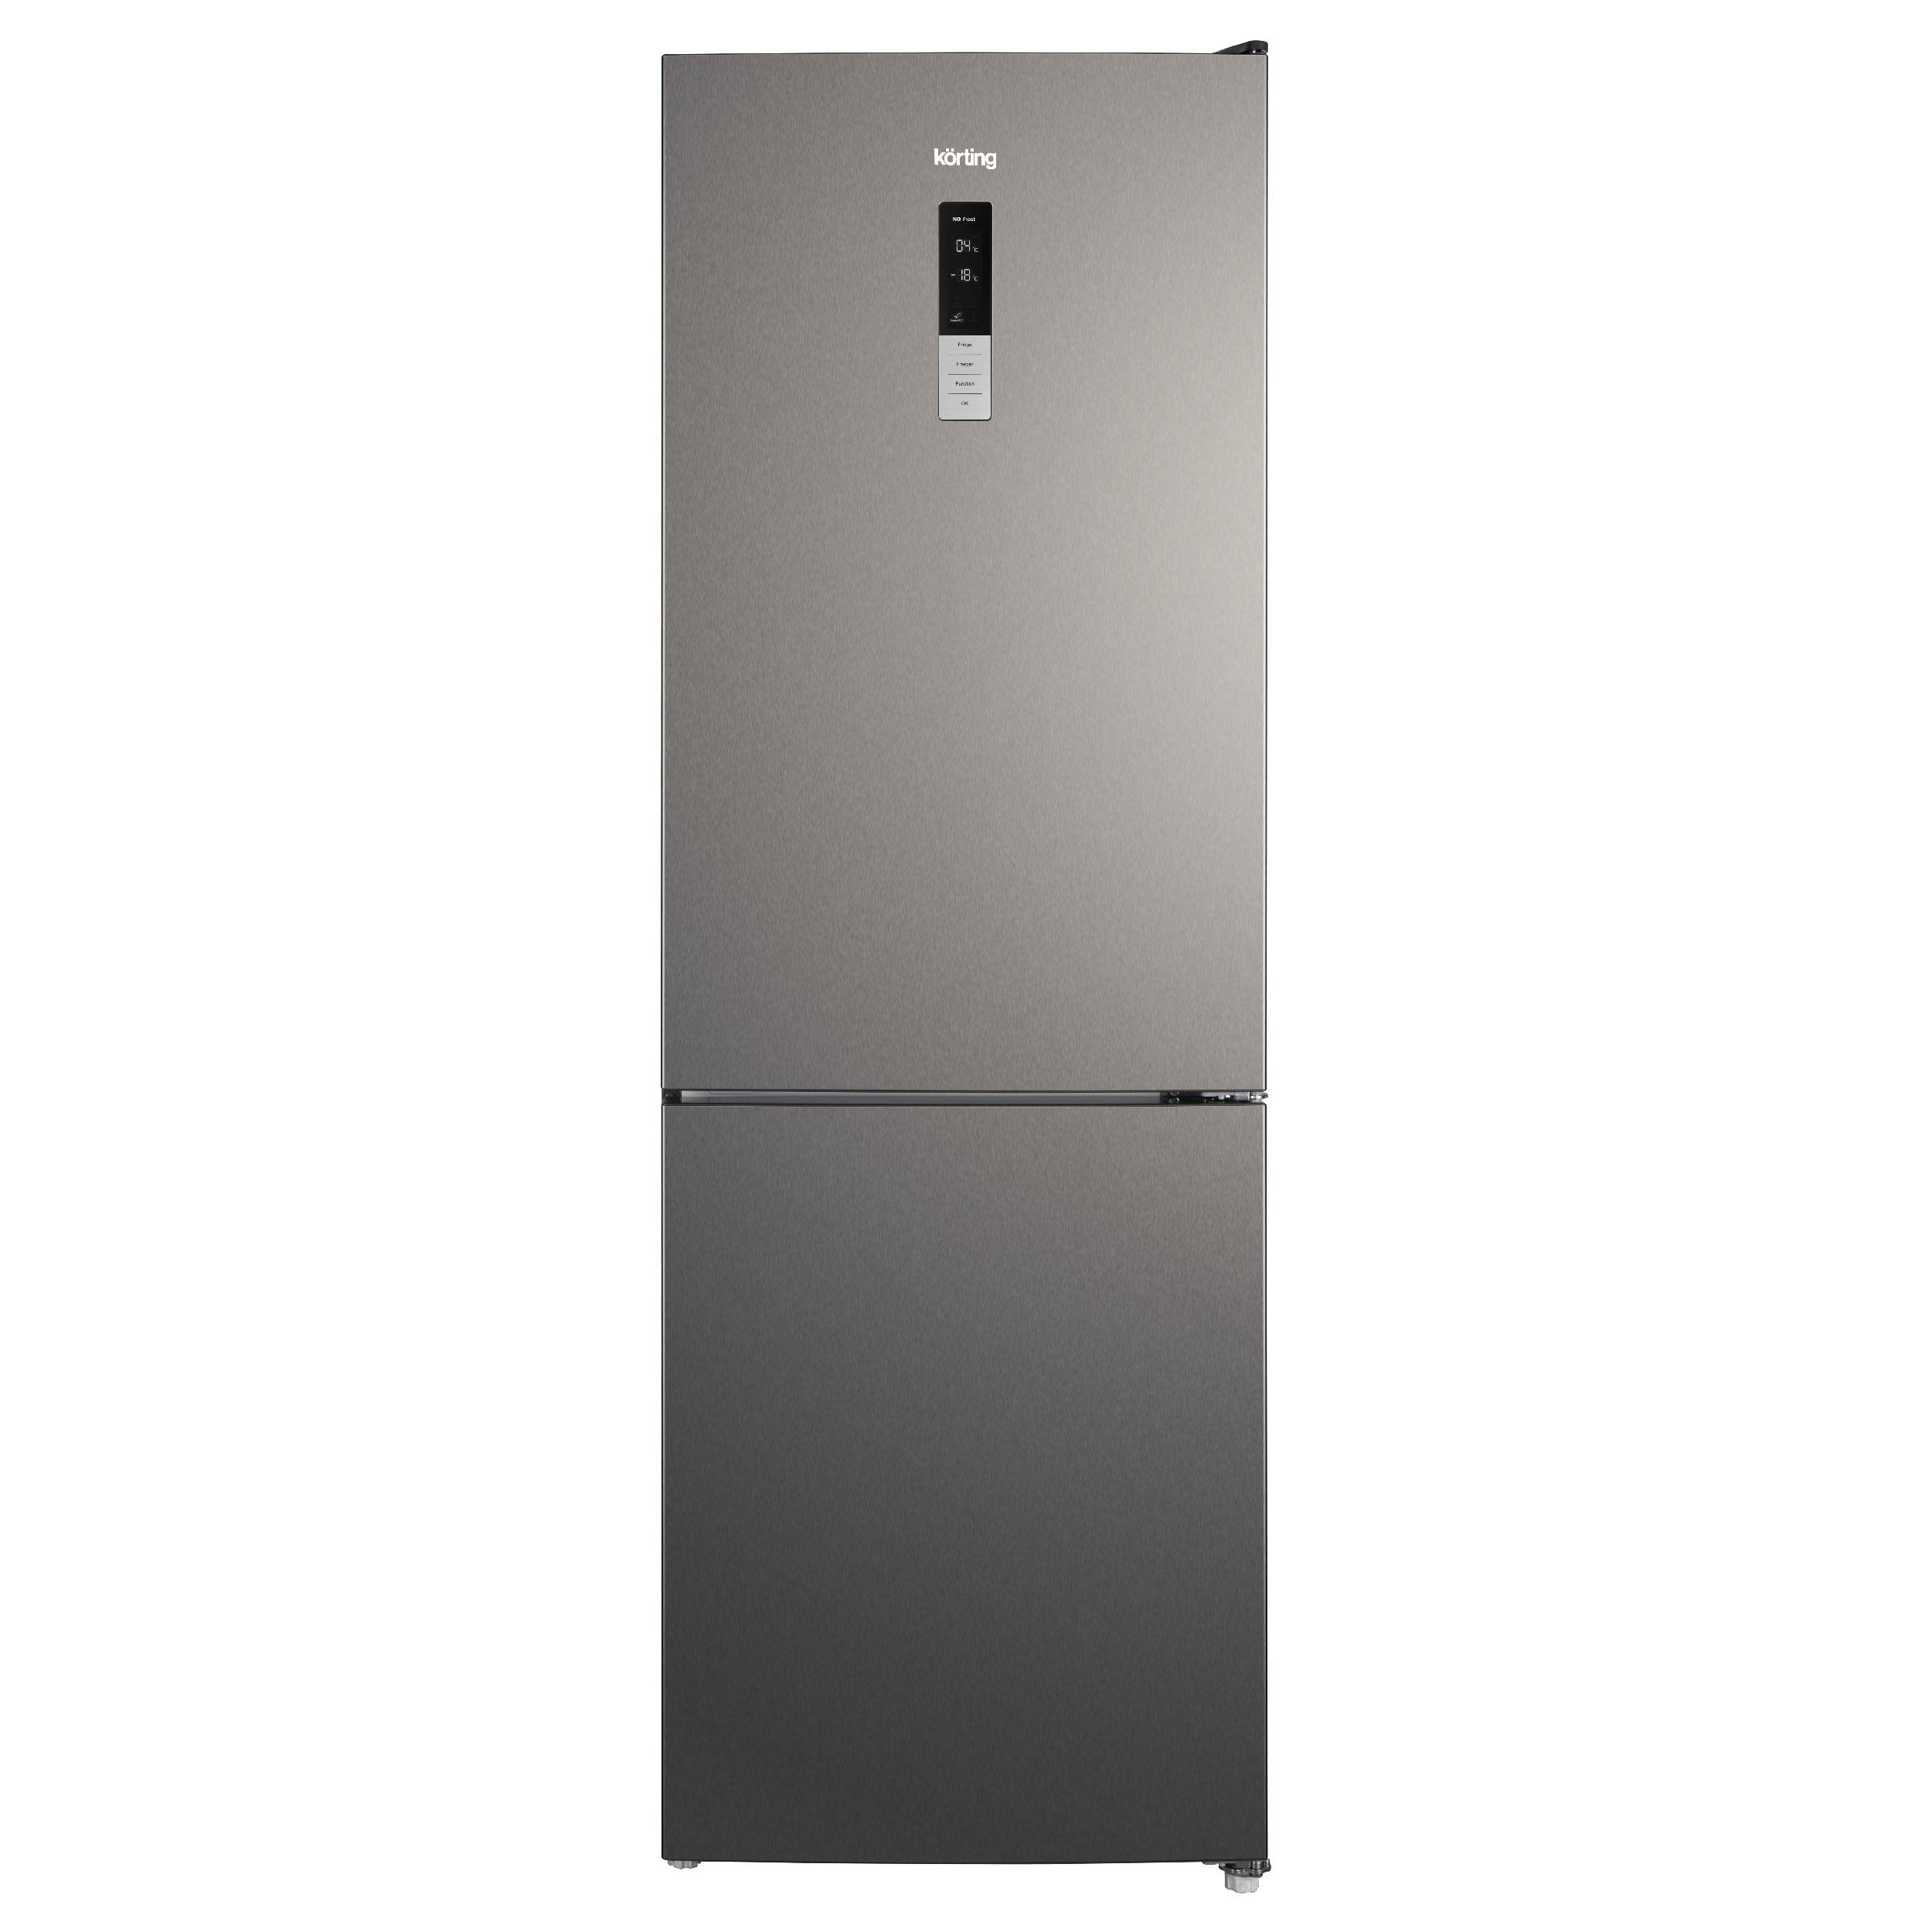 Холодильник Korting KNFC 61869 X серебристый, серый холодильник korting knfc 61869 gn